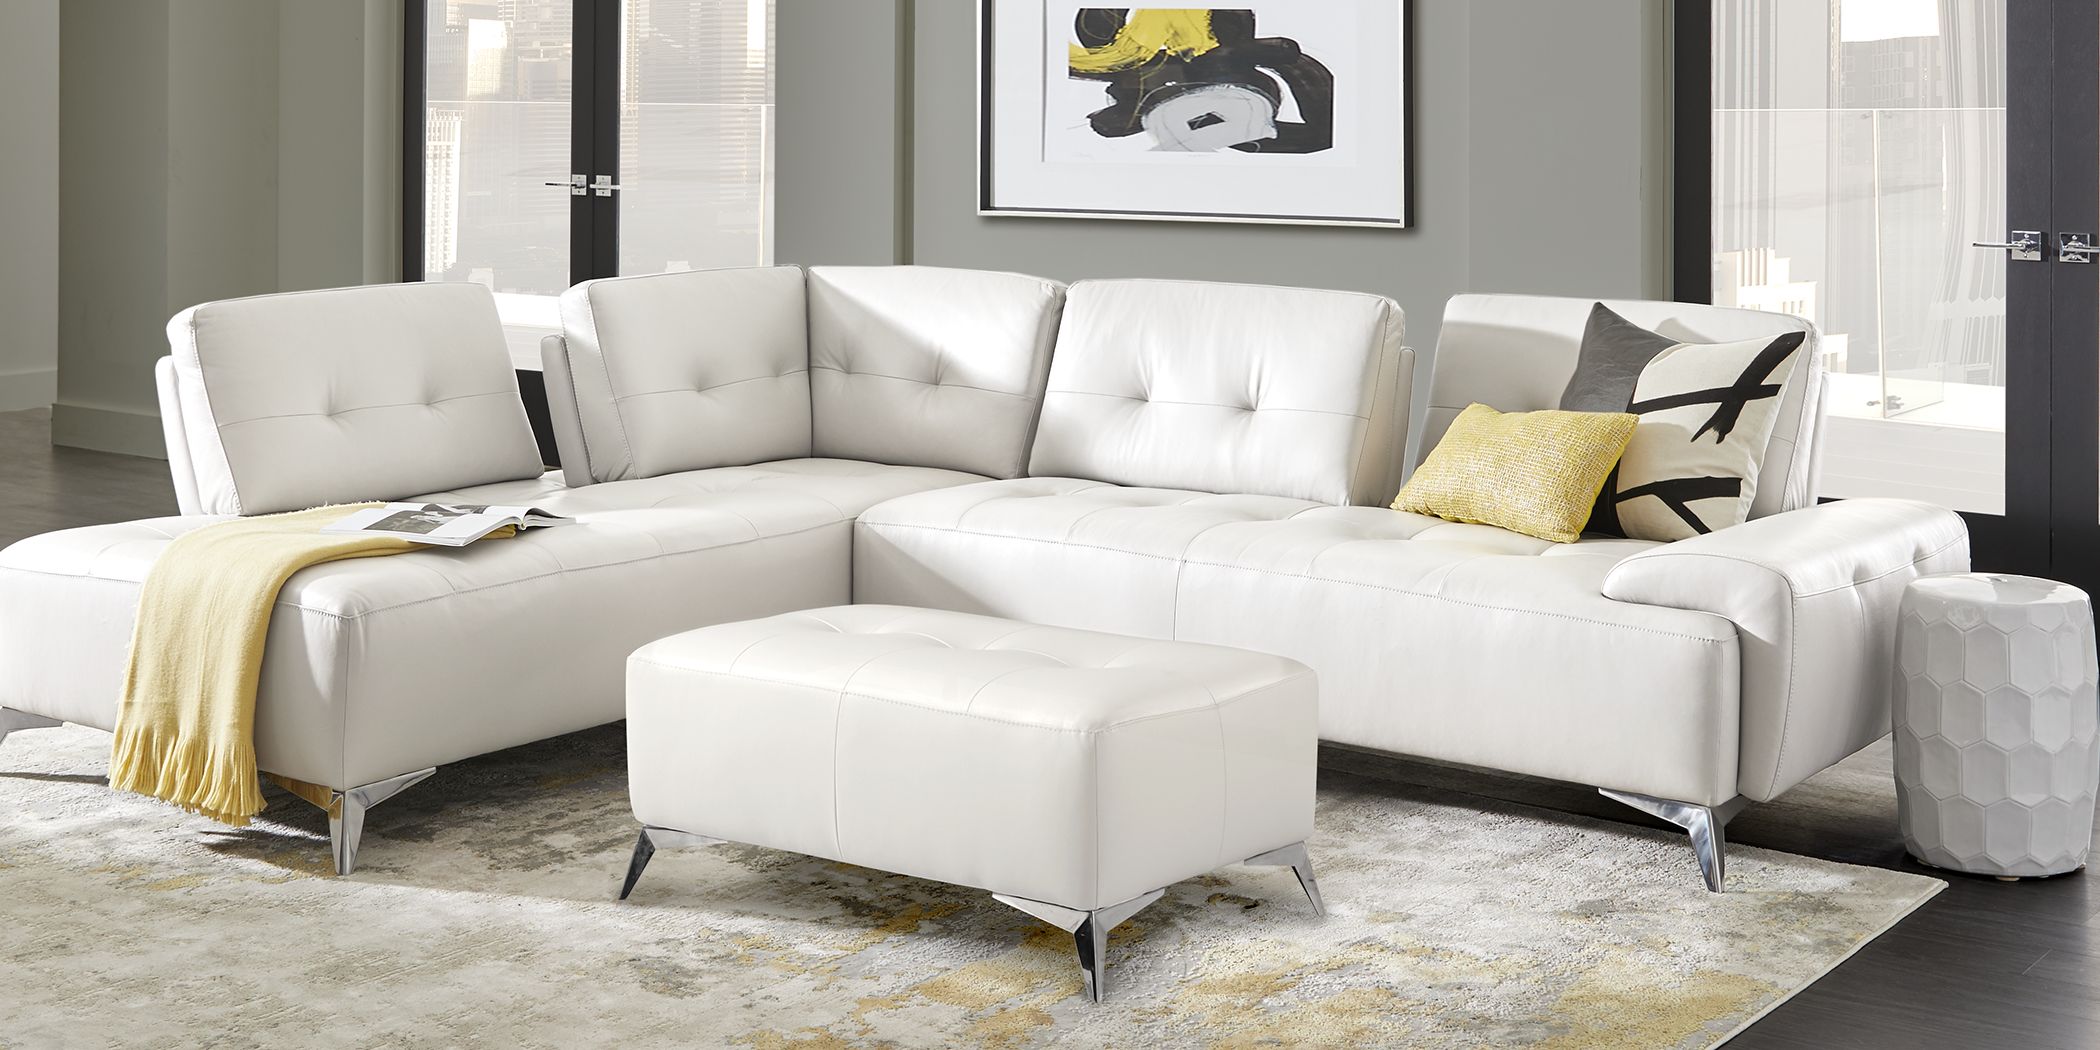 white leather living room design